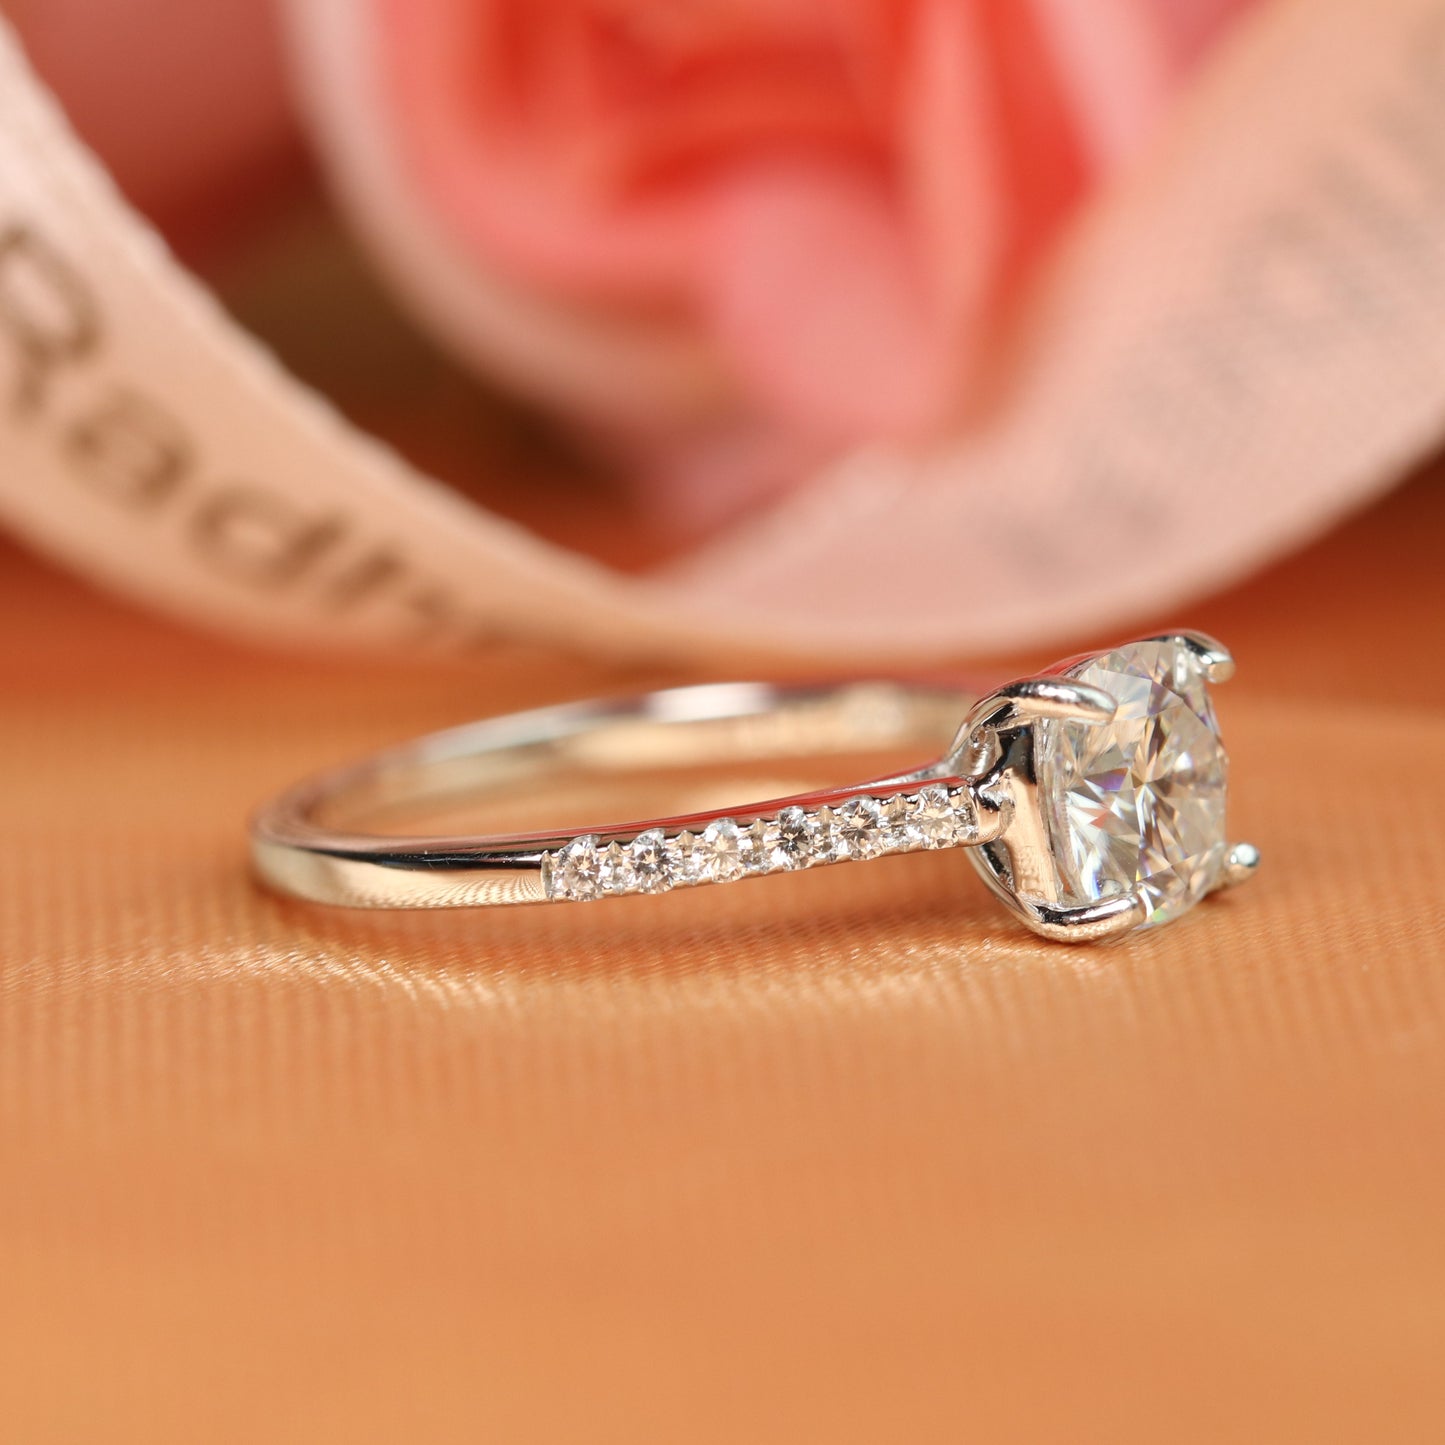 Vintage 1.1 carat cushion cut Moissanite Engagement Ring in White Gold